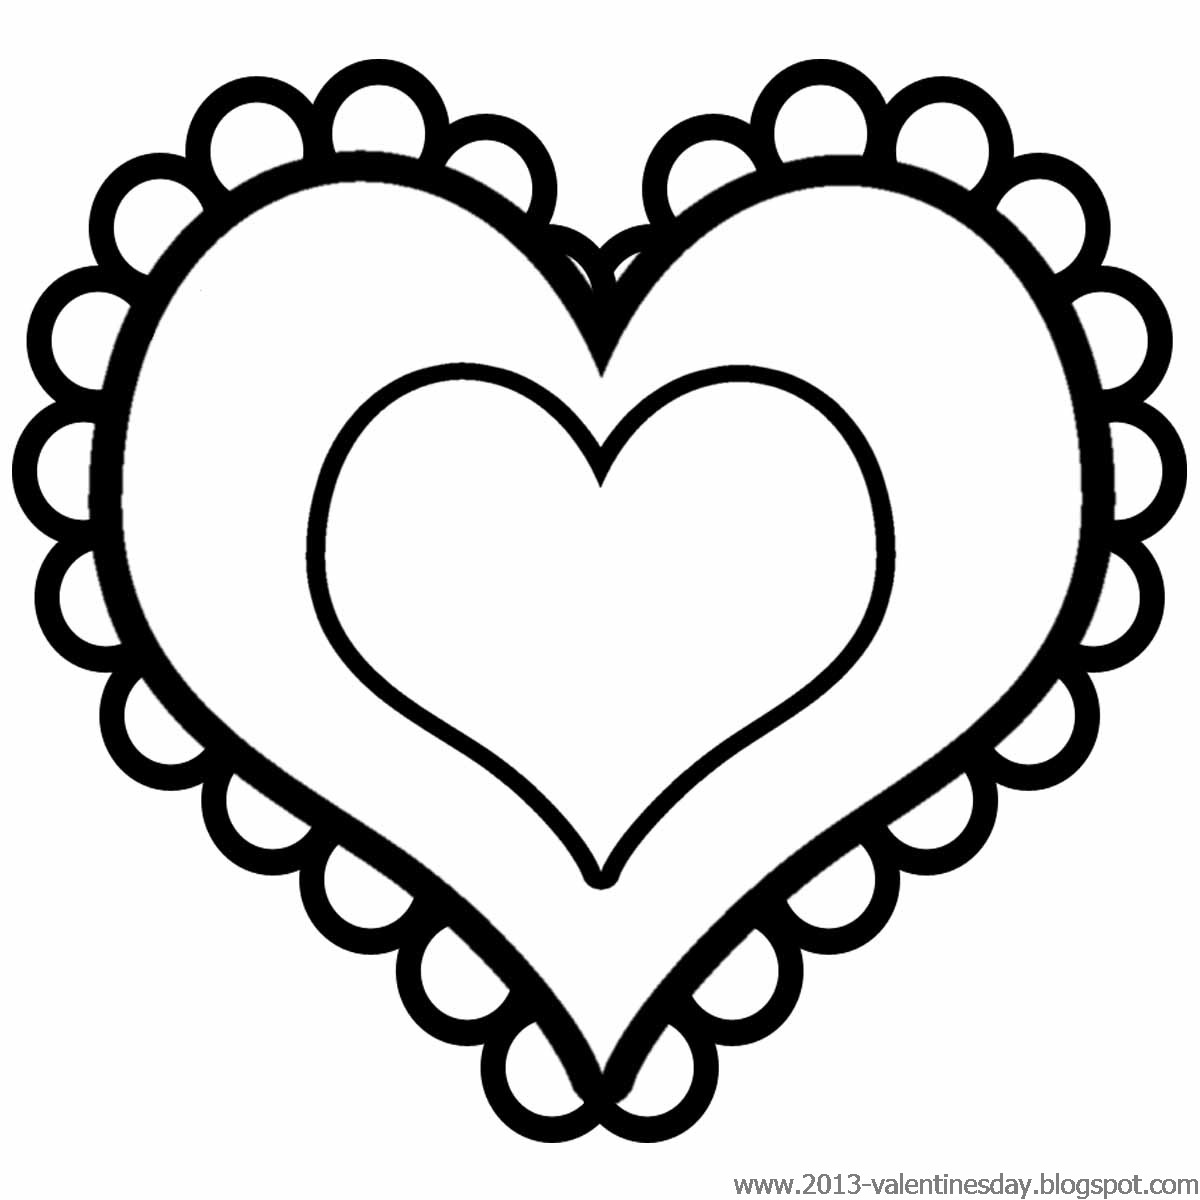 clipart of valentine heart - photo #40